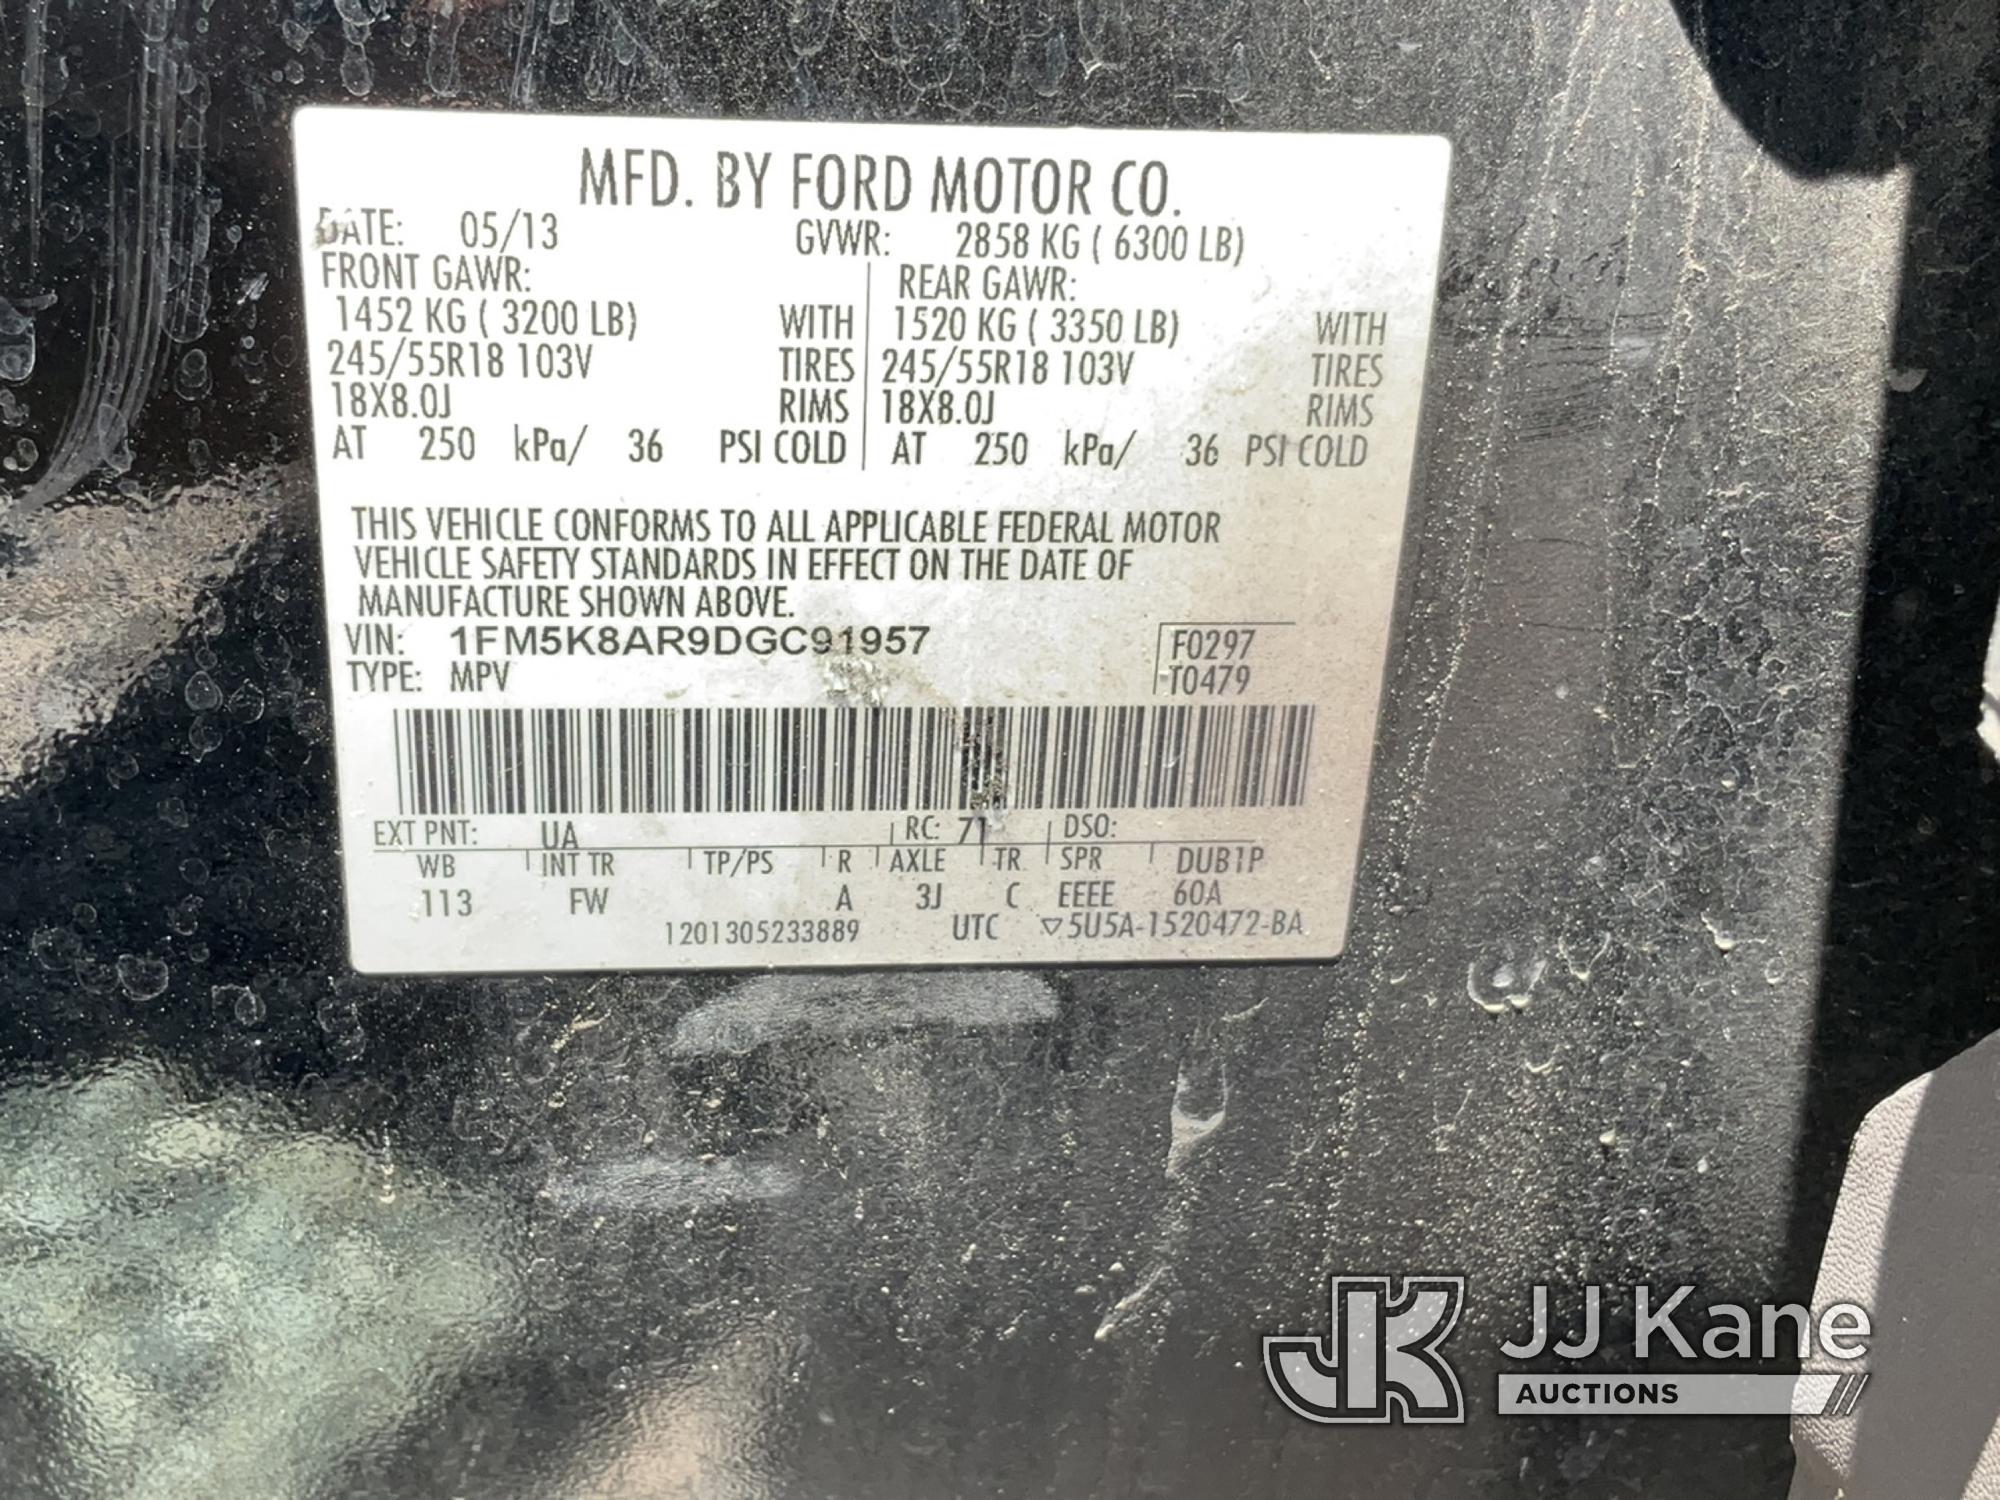 (Las Vegas, NV) 2013 Ford Explorer AWD Police Interceptor Interior Damage, Rear Seats Unsecured, No